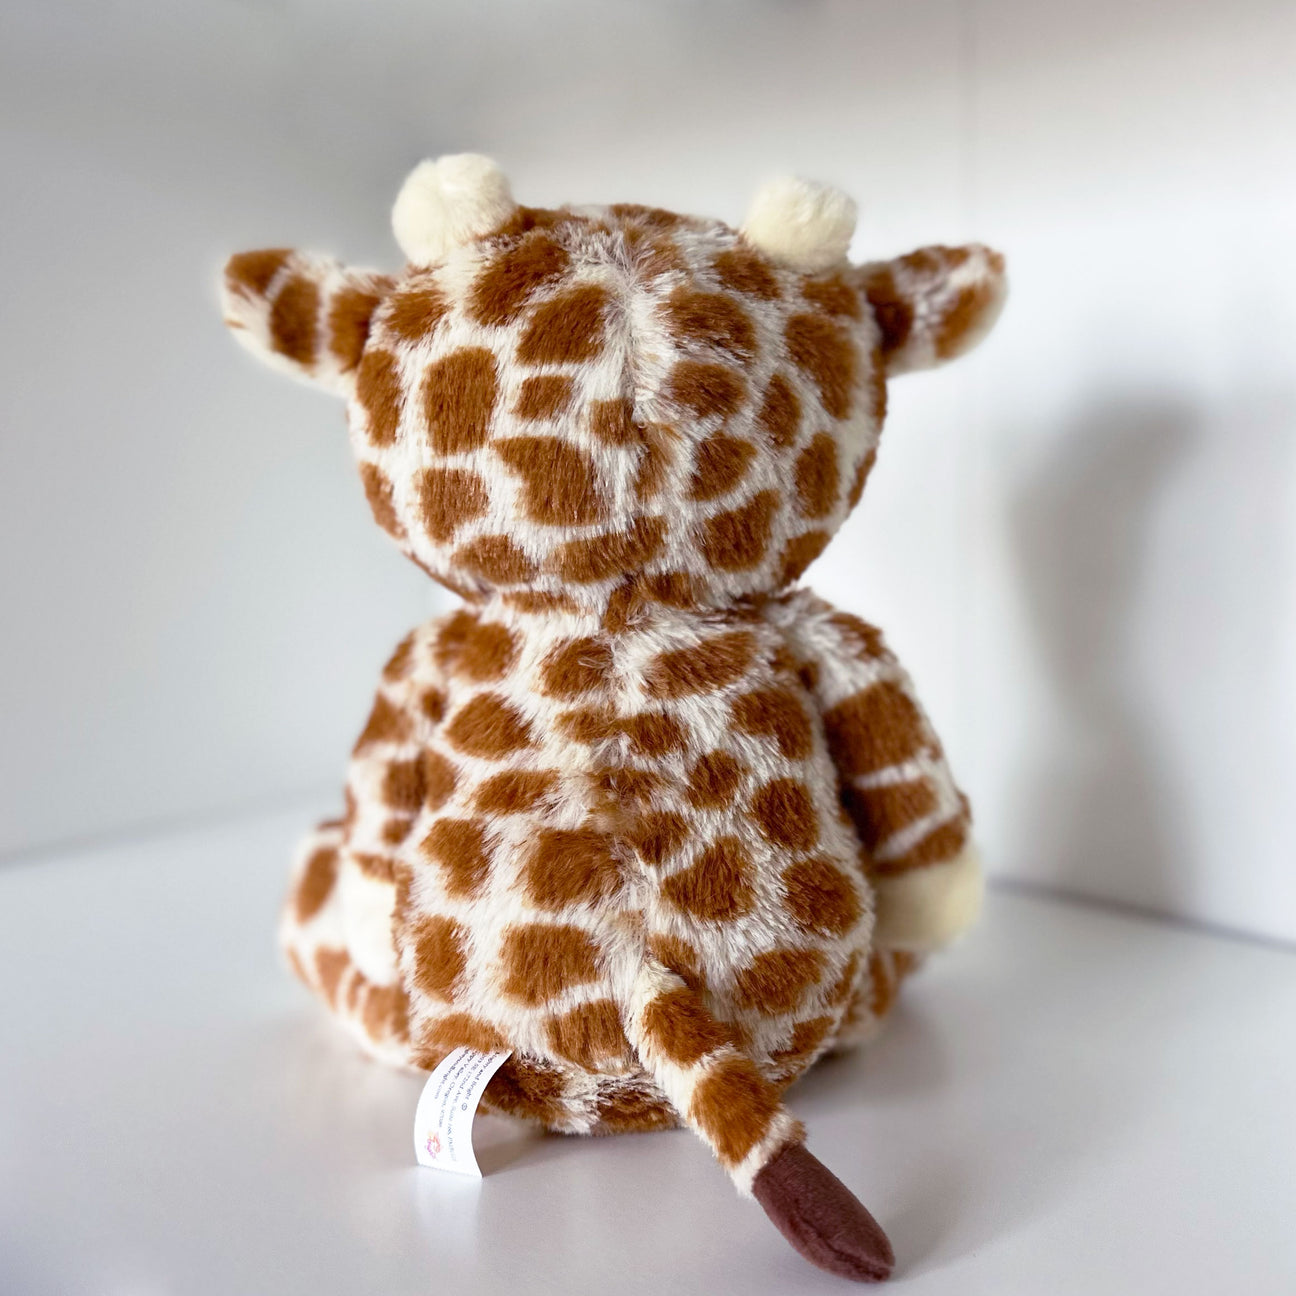 Stuart the Giraffe: a Stuffy to Help Kids Cope